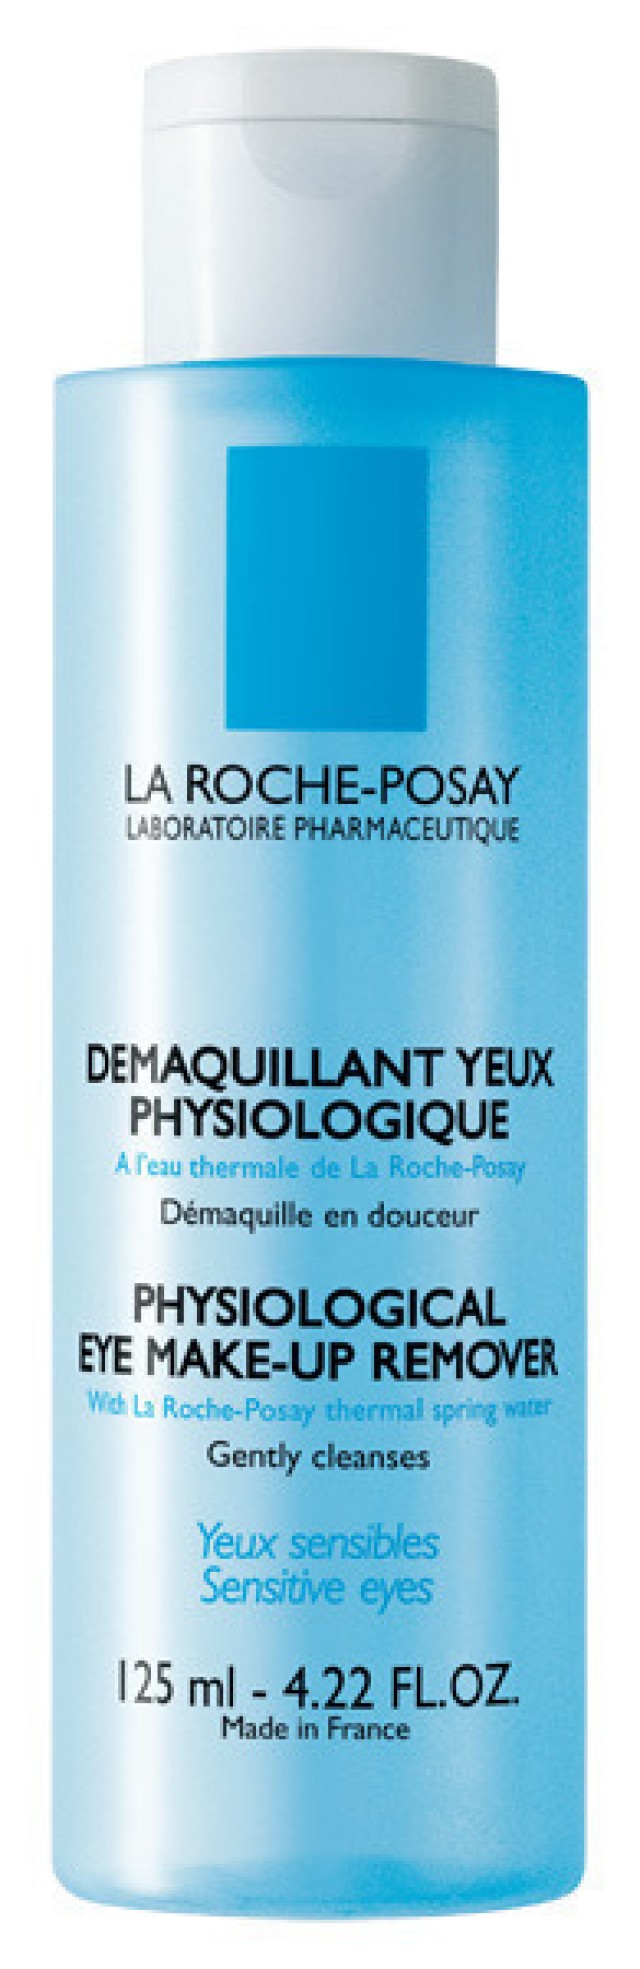 La Roche Posay Lotion Demaquillant Yeux 125ml